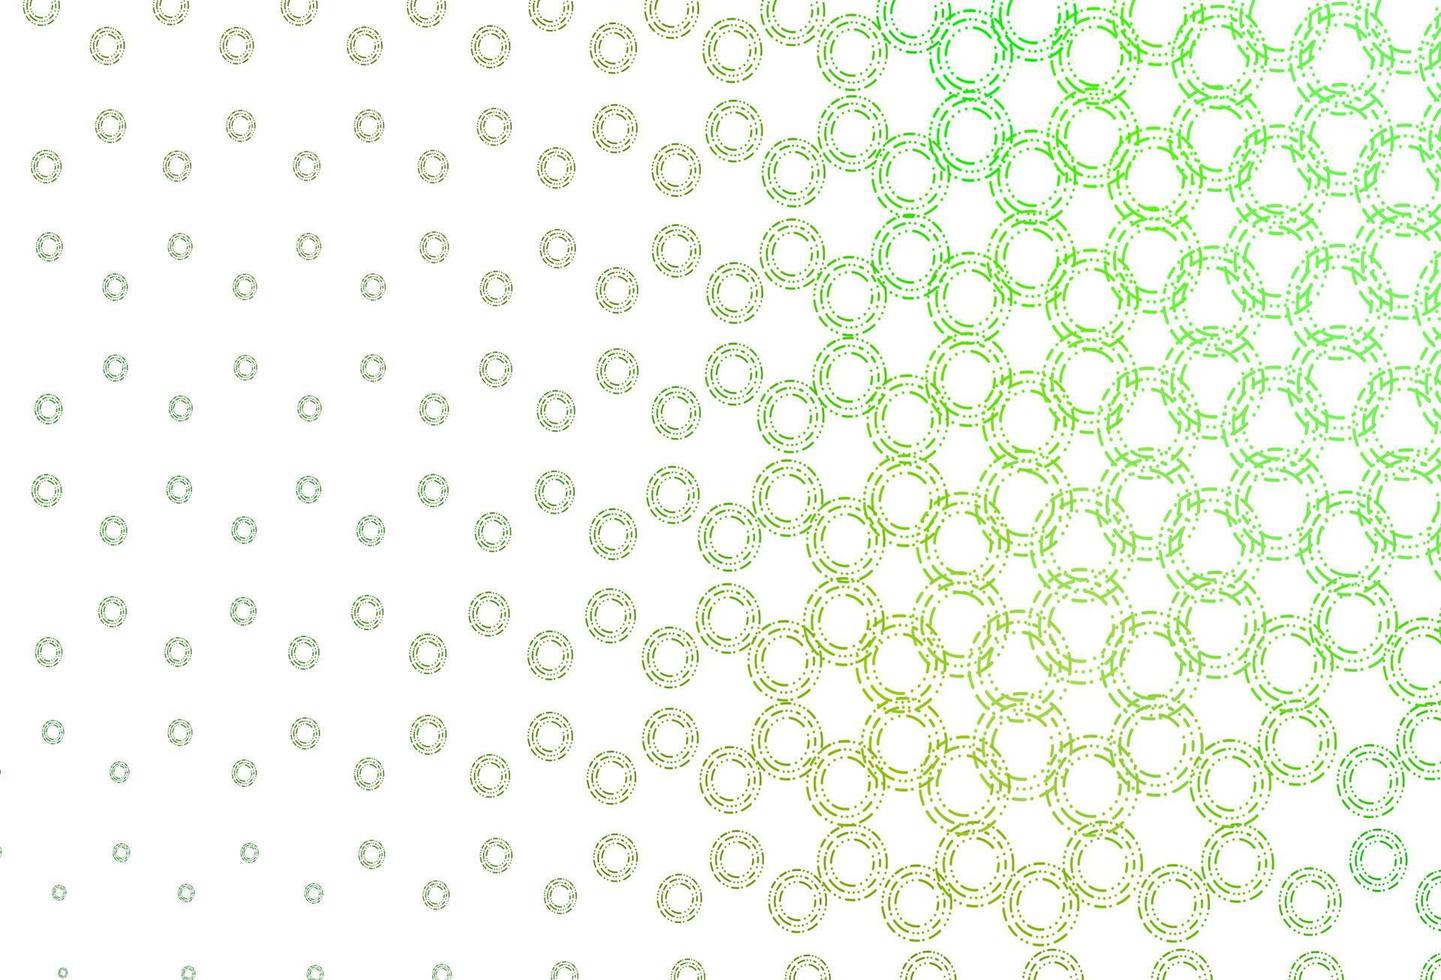 textura de vector verde claro con discos.